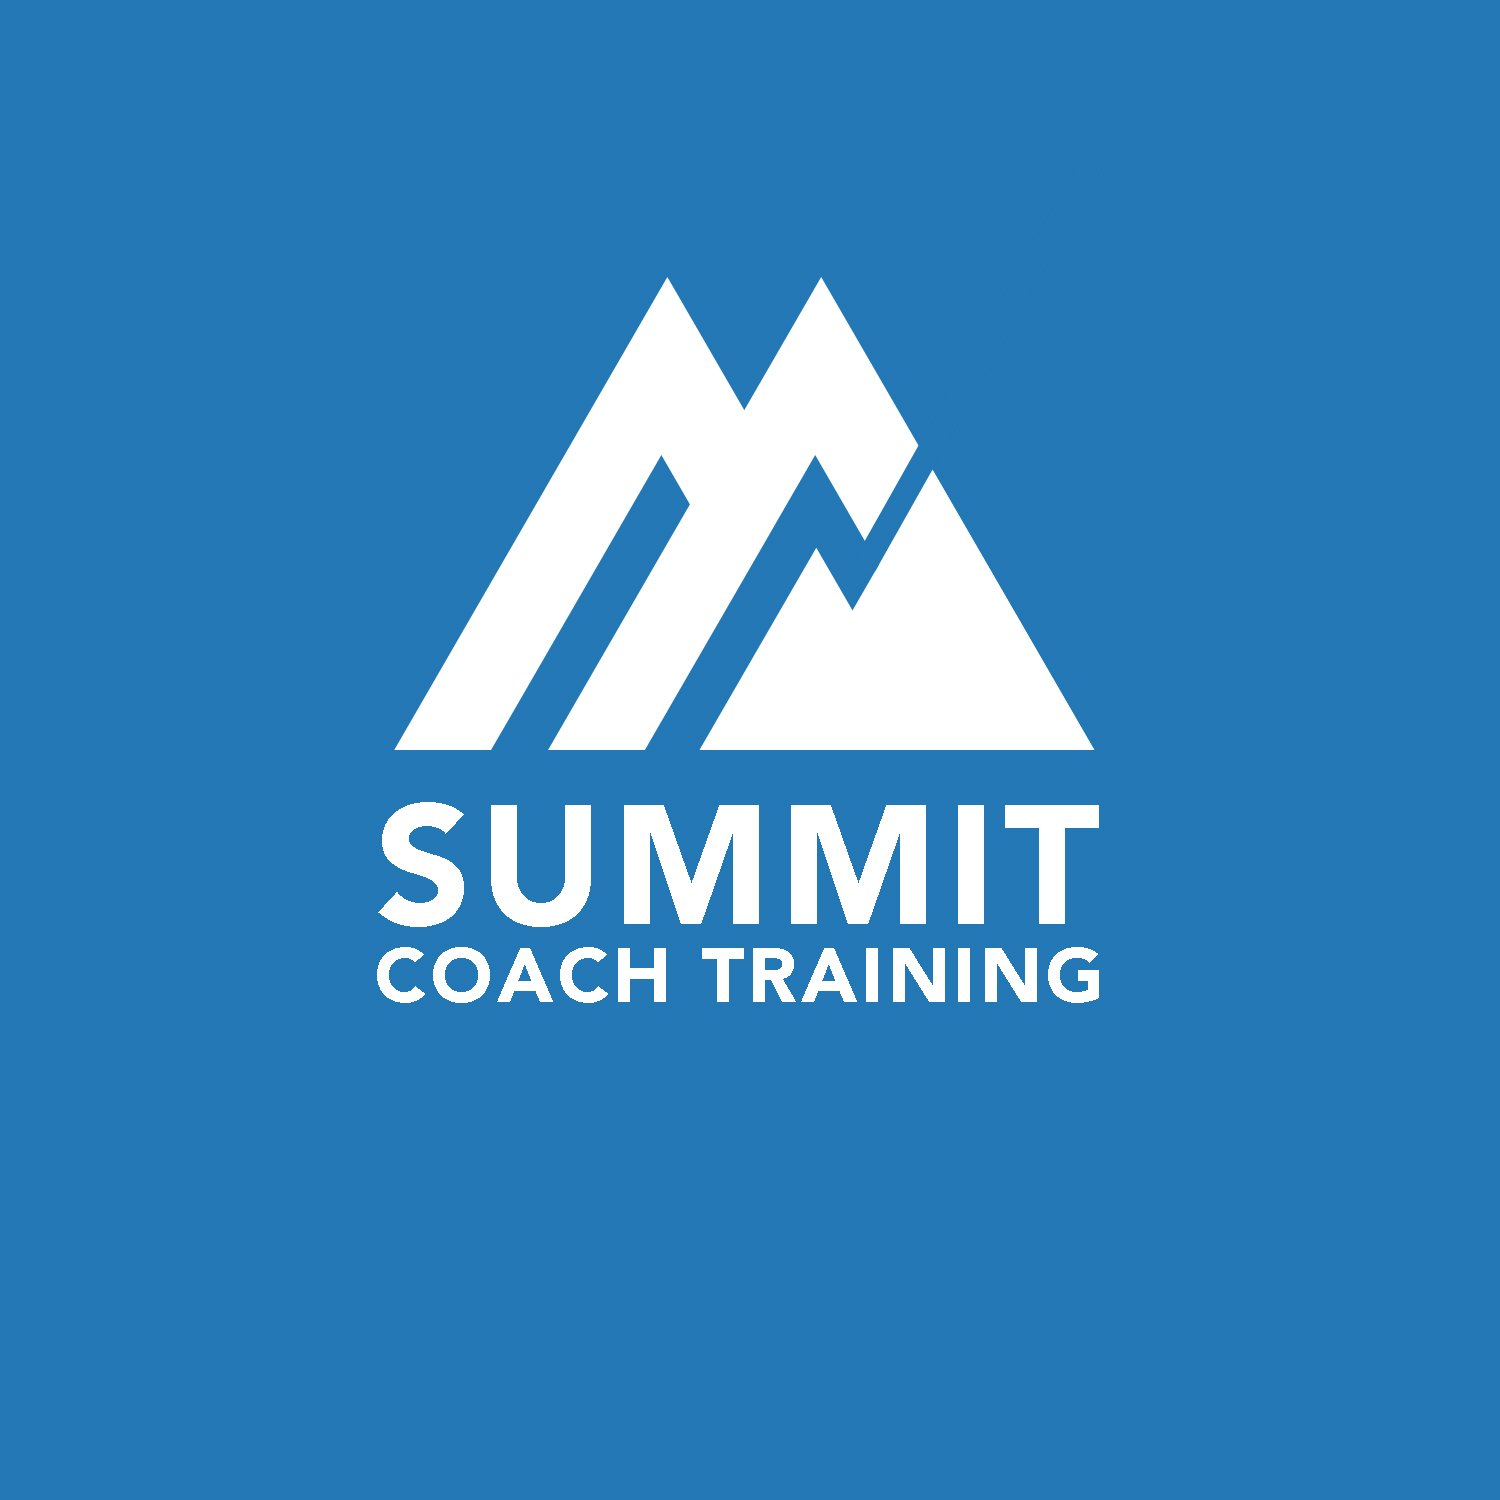 Summit Coach Training — Pinnacle Leadership Associates